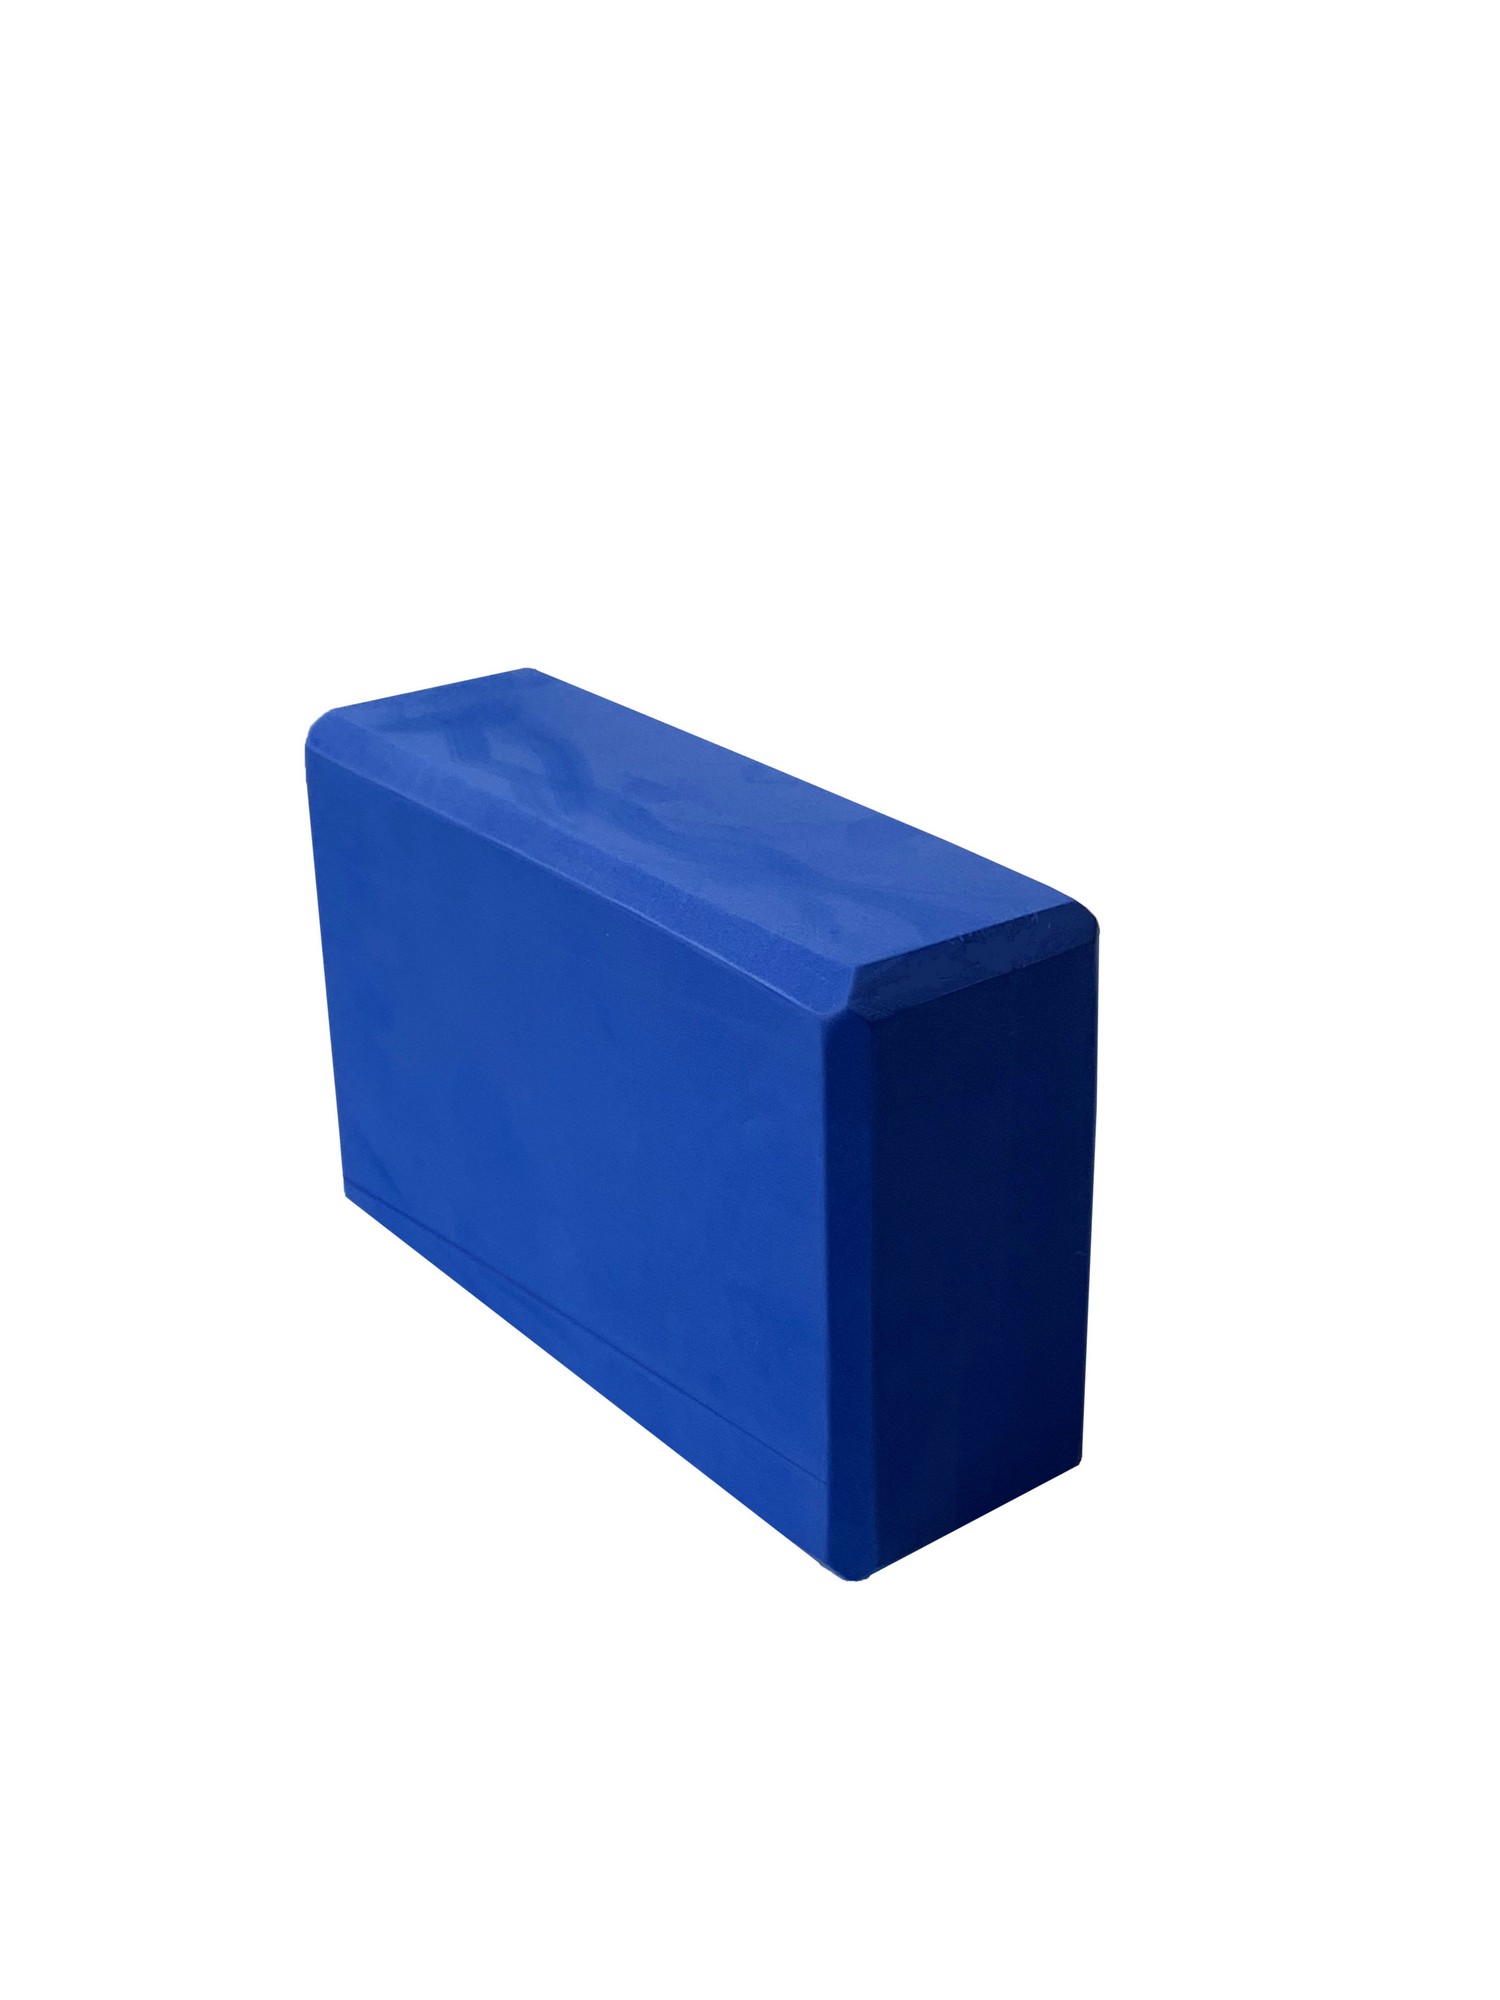 Йога блок Sportex полумягкий, из вспененного ЭВА 22,3х15х7,6 см E39131-53 синий